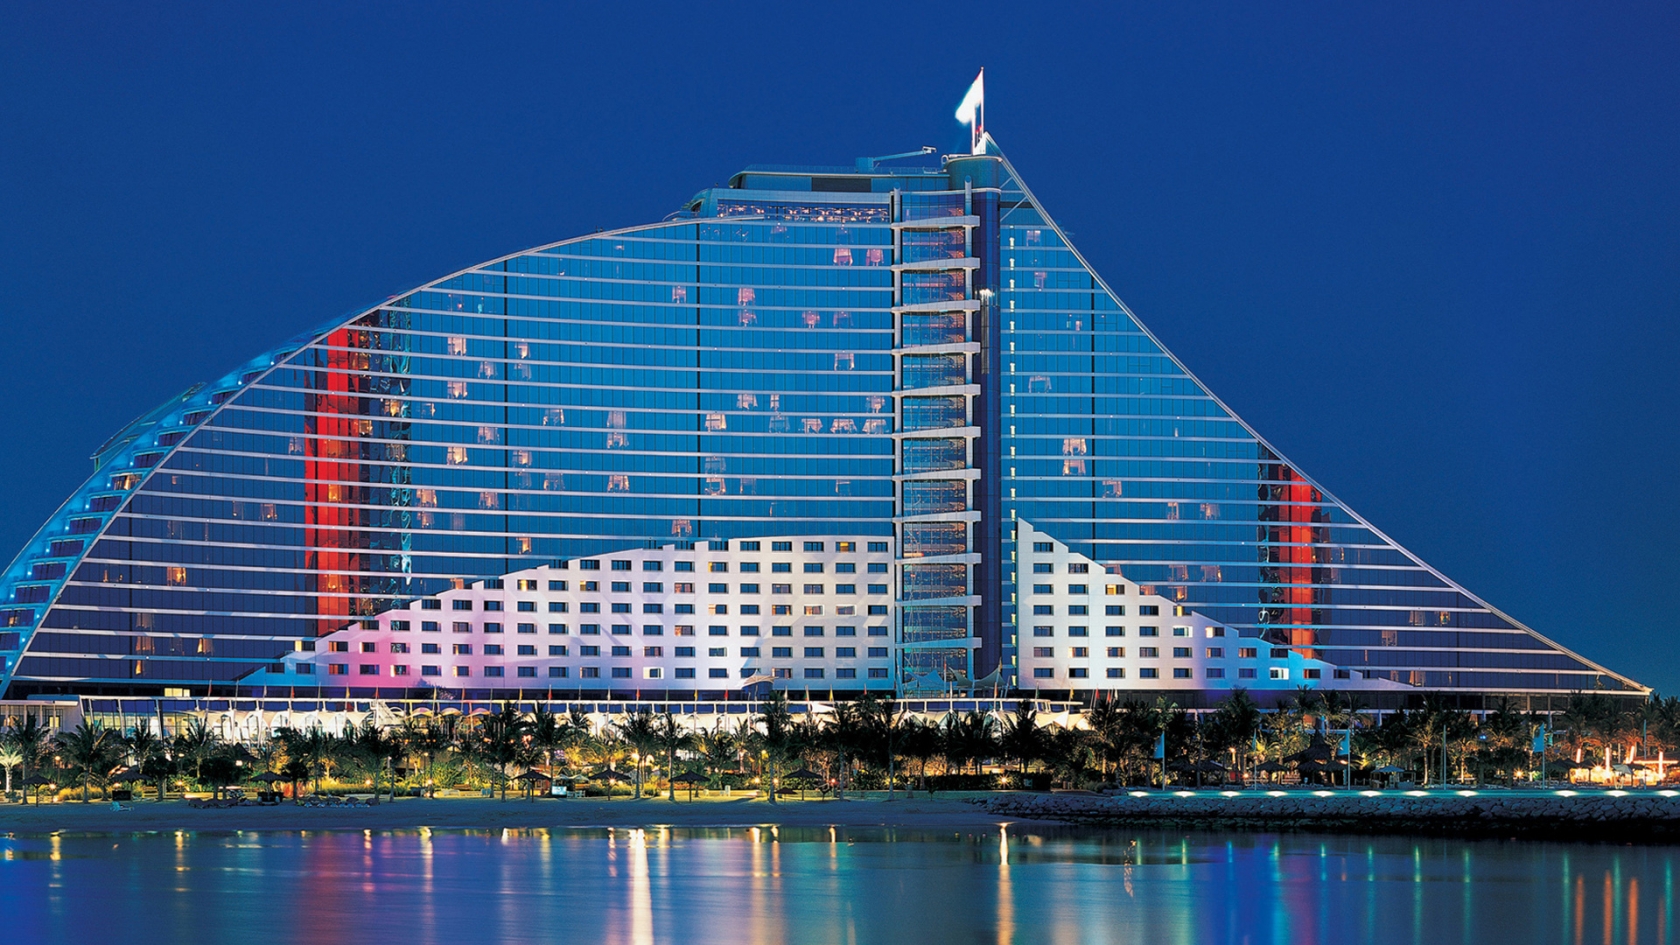 Jumeirah Beach Hotel Dubai for 1680 x 945 HDTV resolution